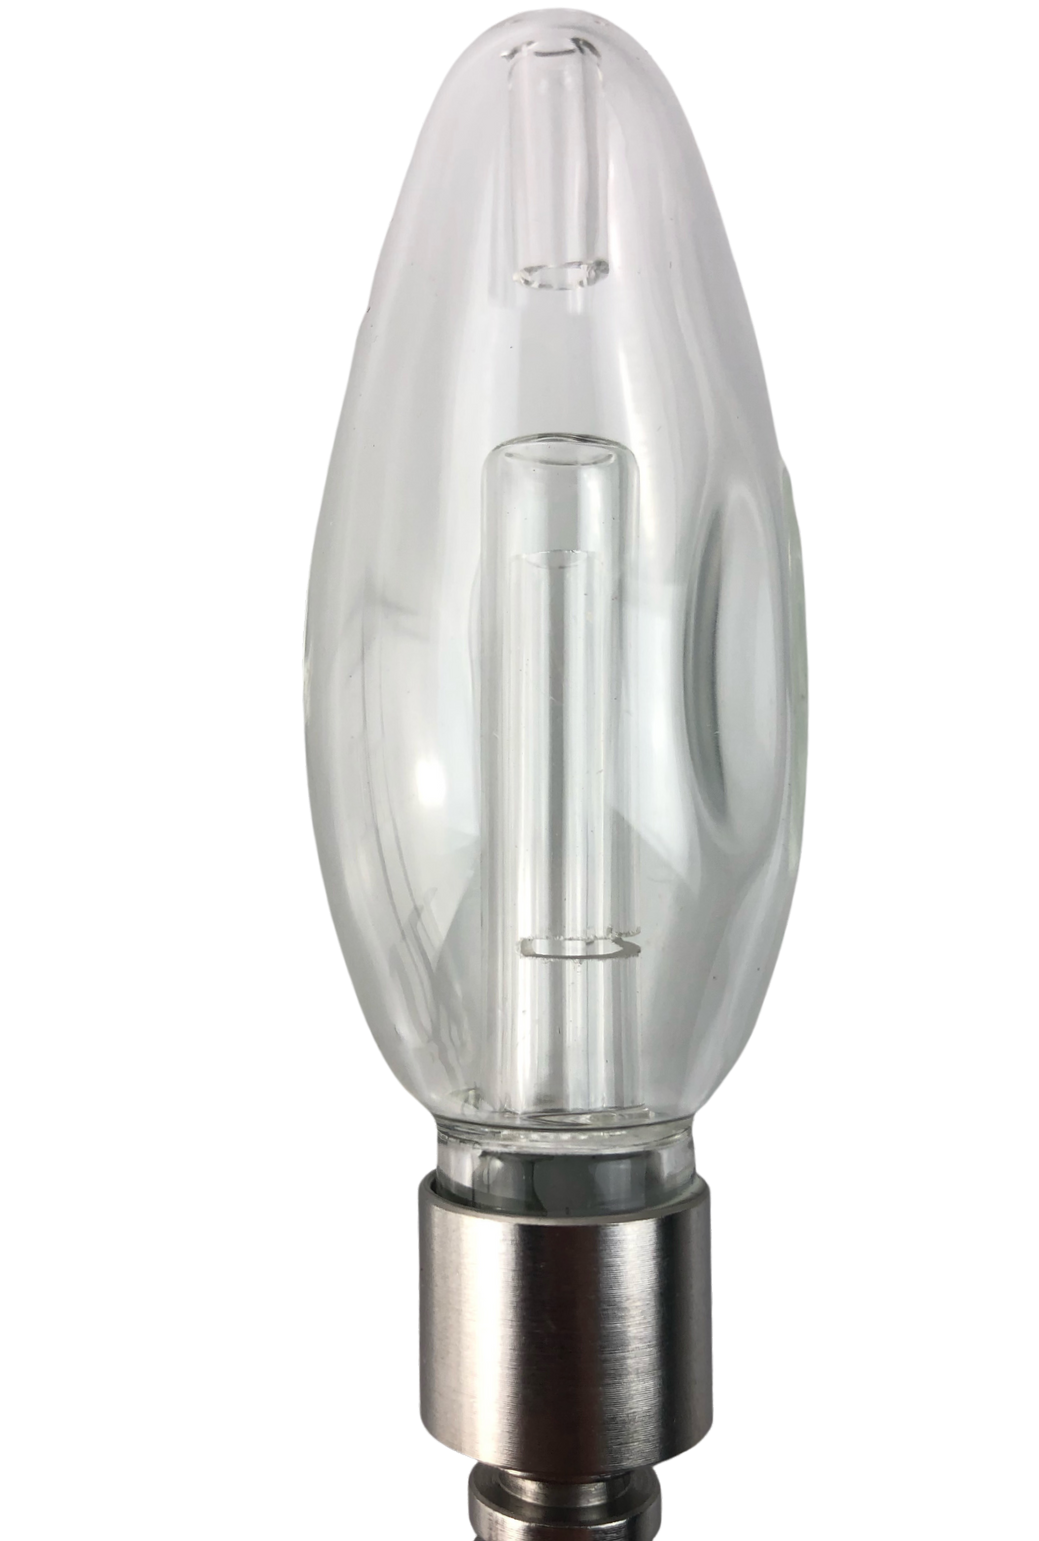 Light Bulb Nectar Collector w/ Dish